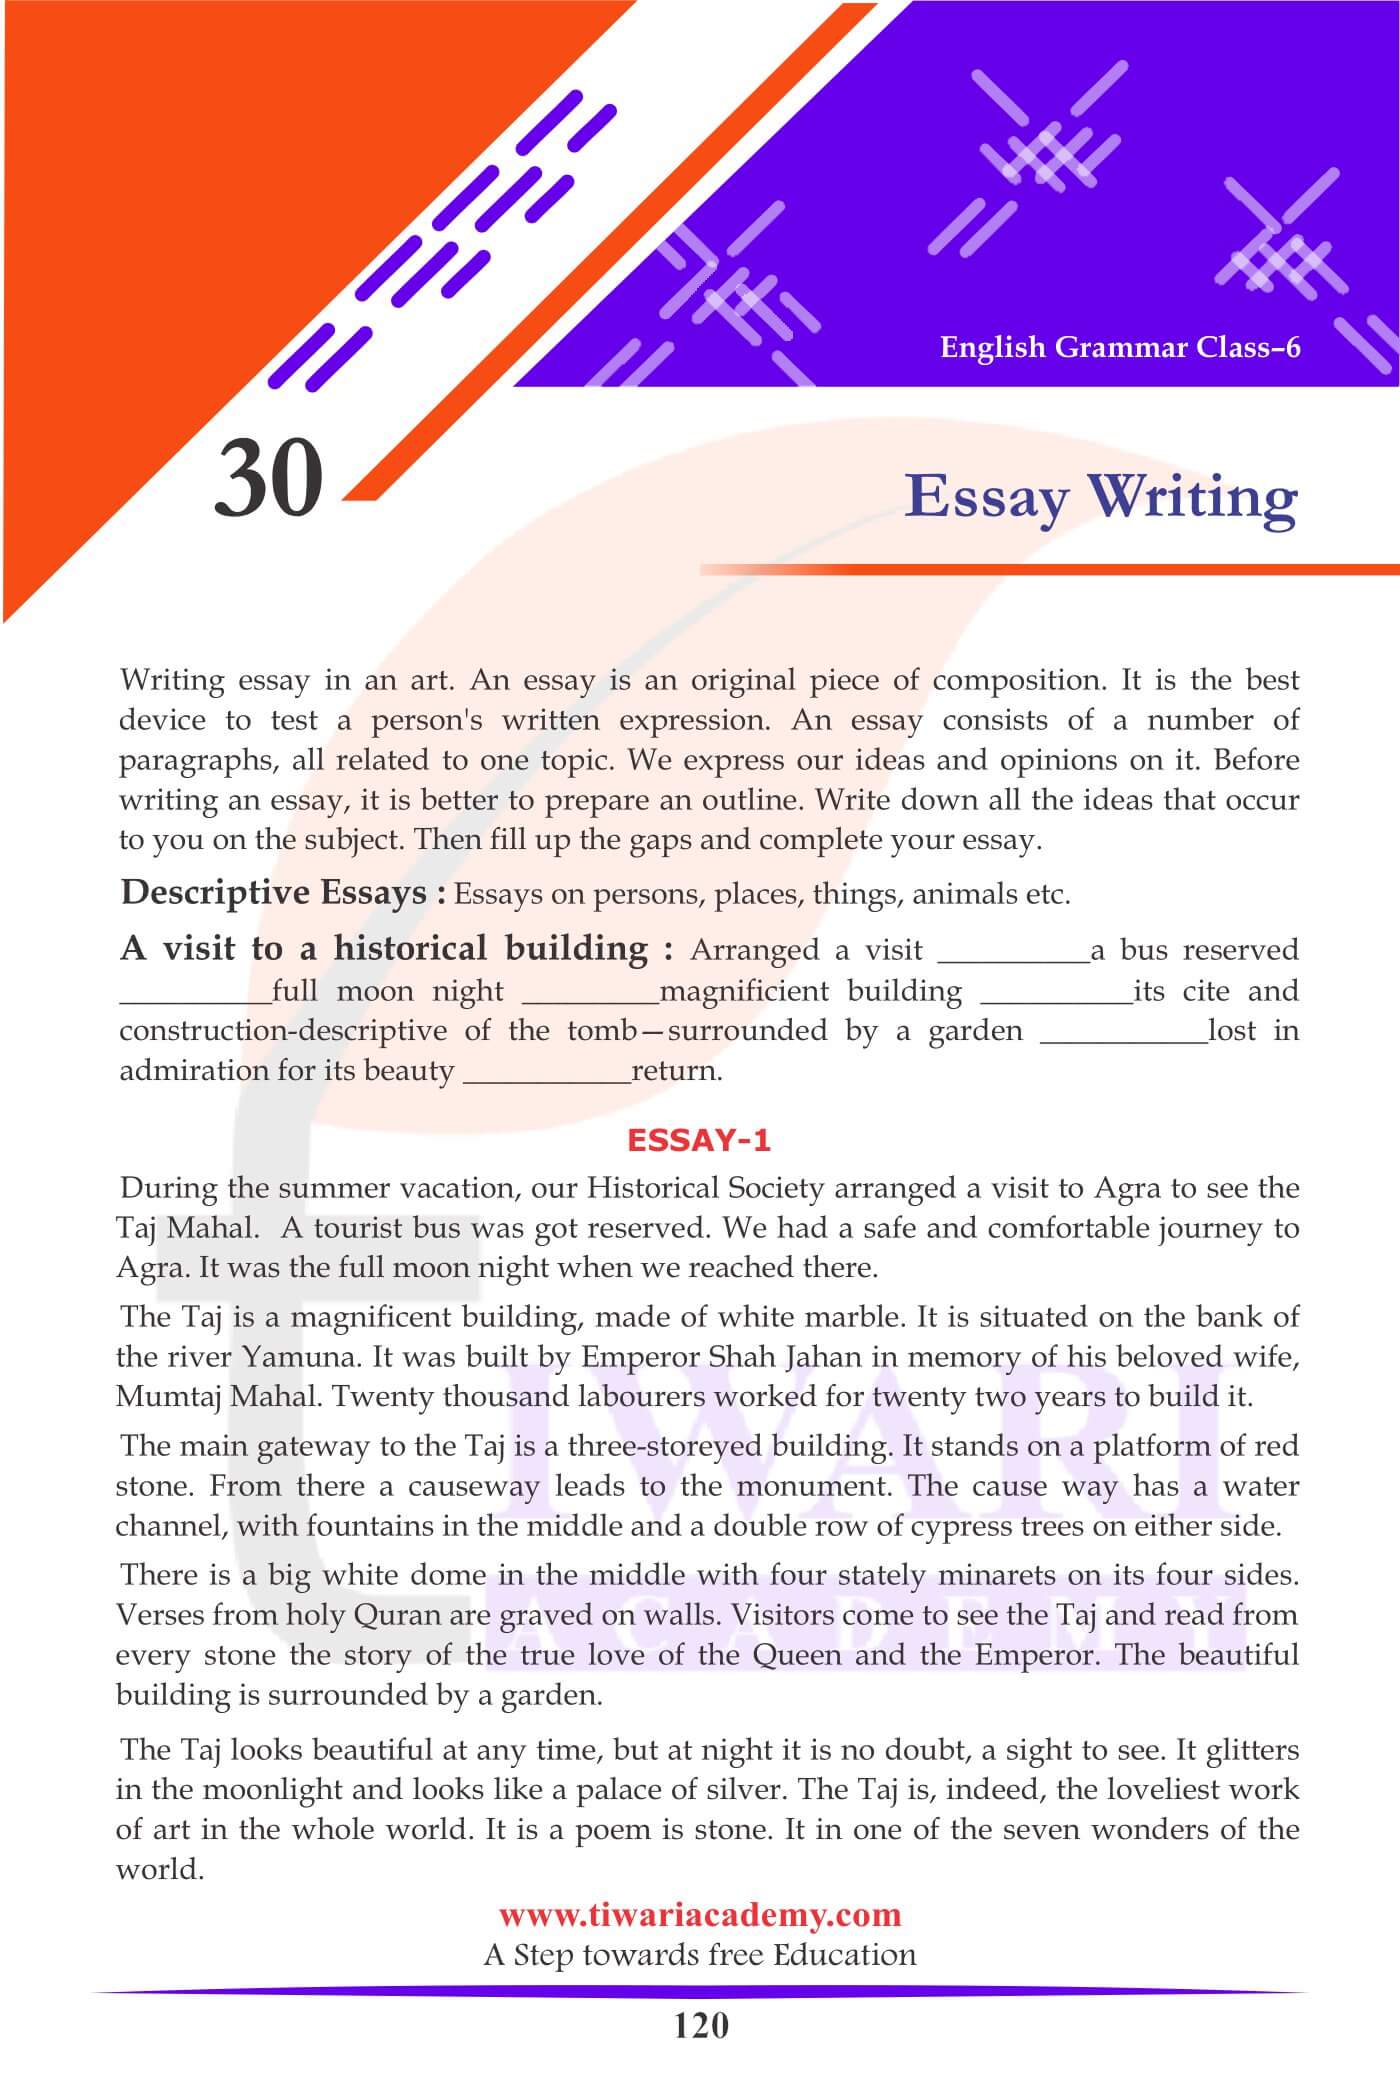 Class 6 English Grammar Chapter 30 Essay Writing